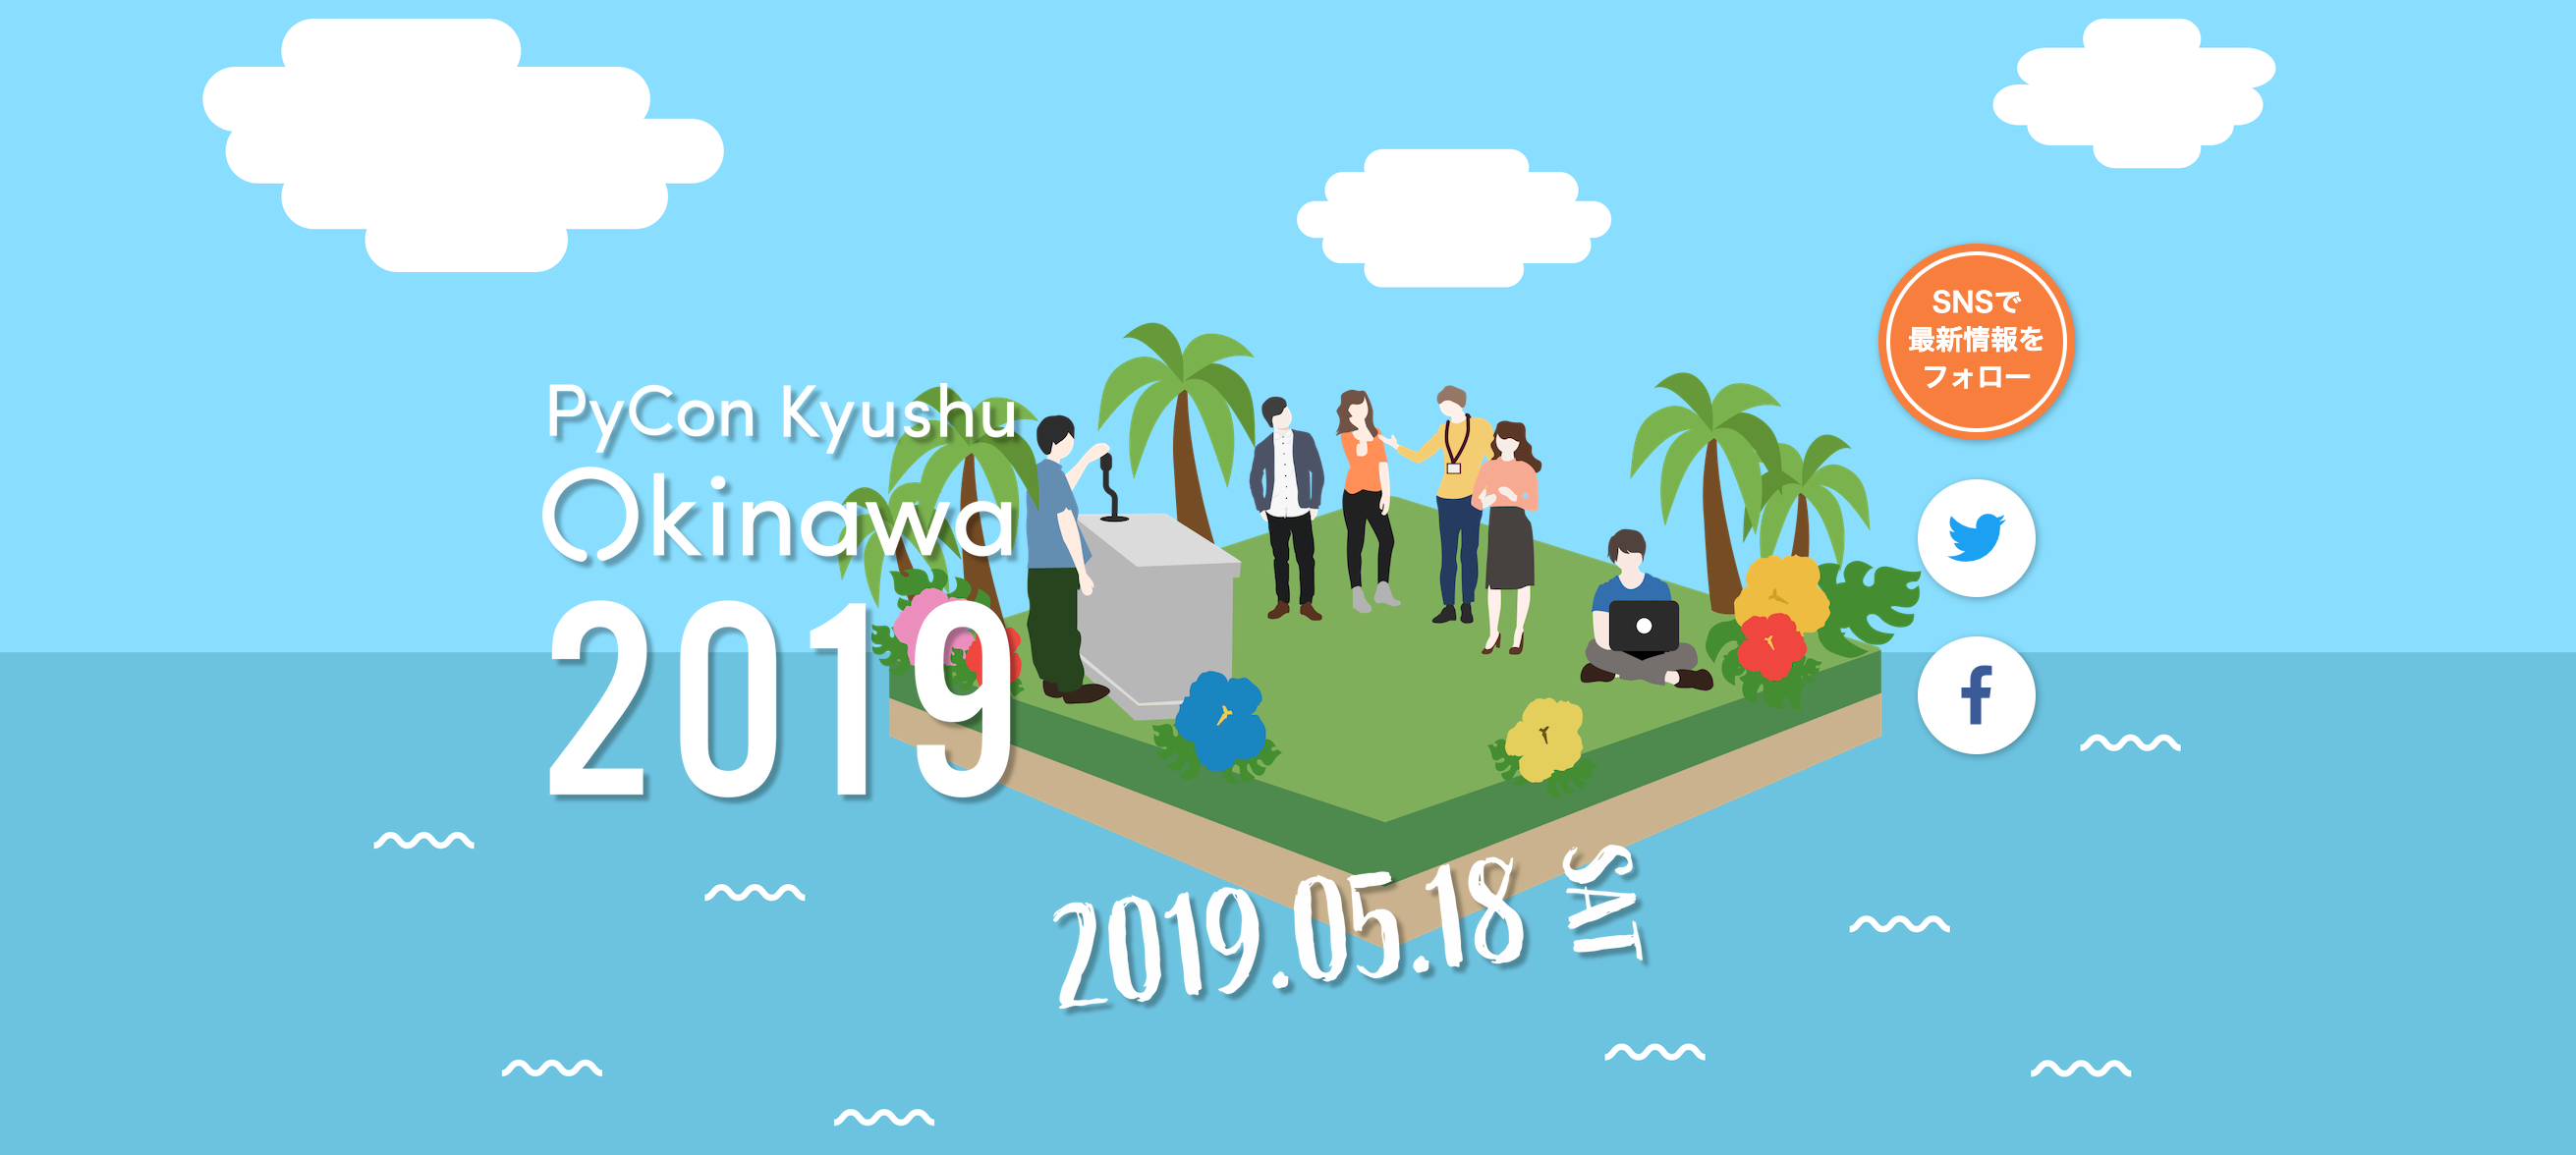 PyCon Kyushu in Okinawa 2019 サムネイル